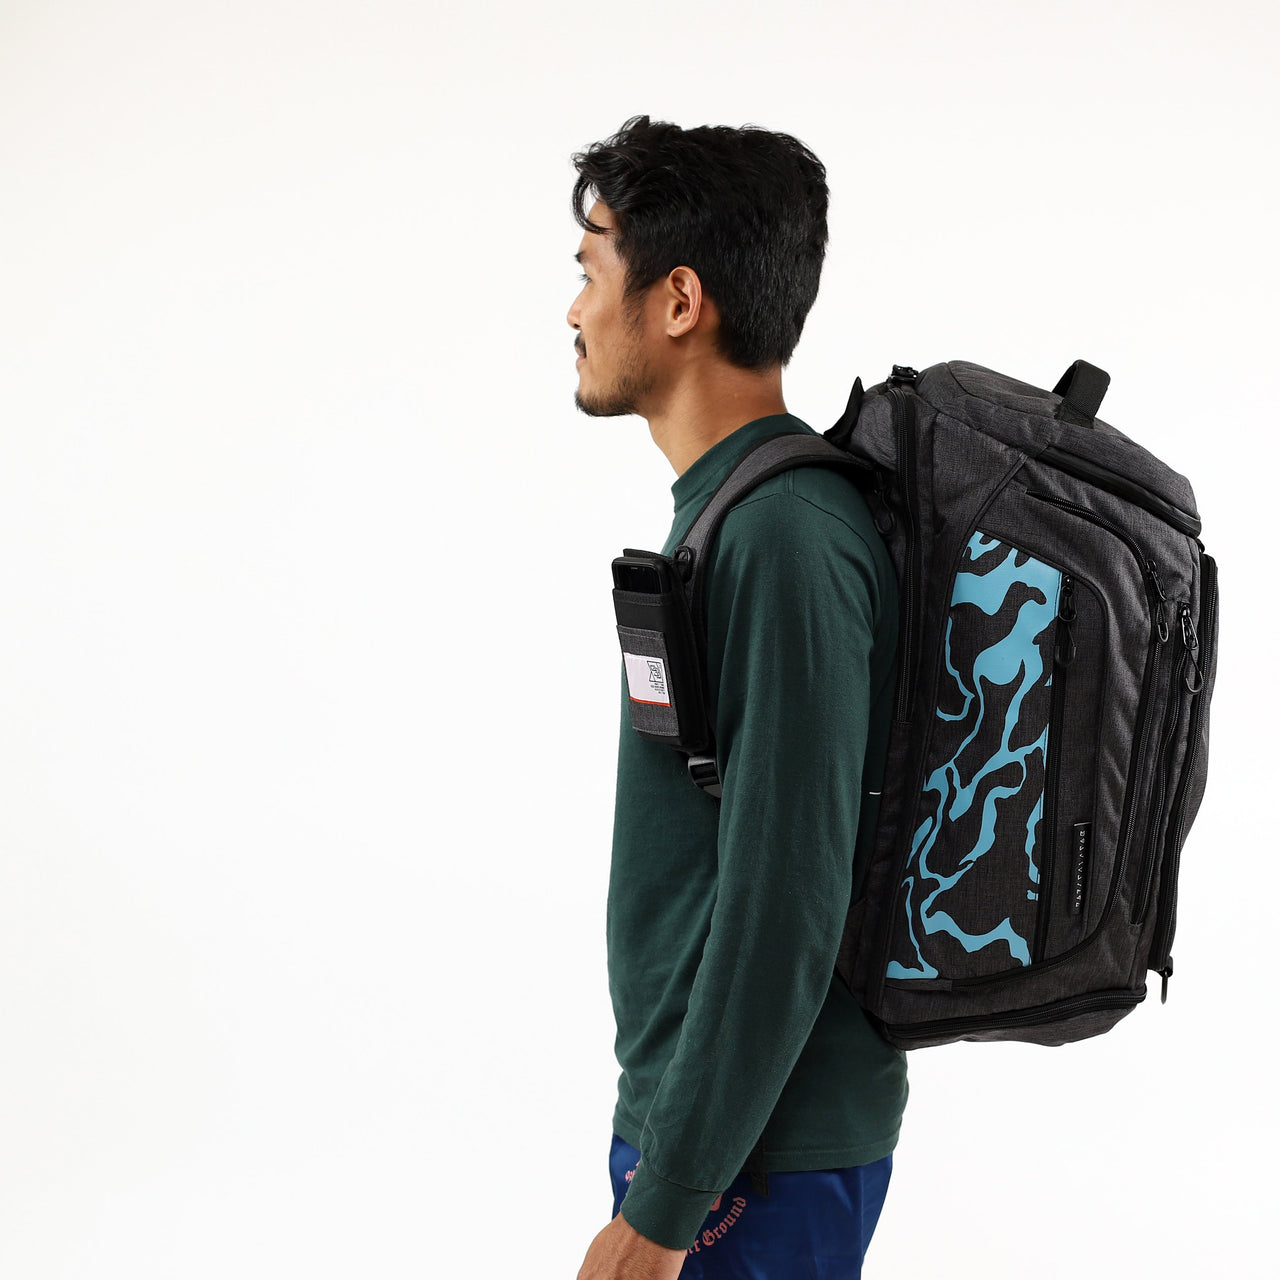 93brand "Construct" Convertible Gear Bag (Duffel/Backpack Hybrid)